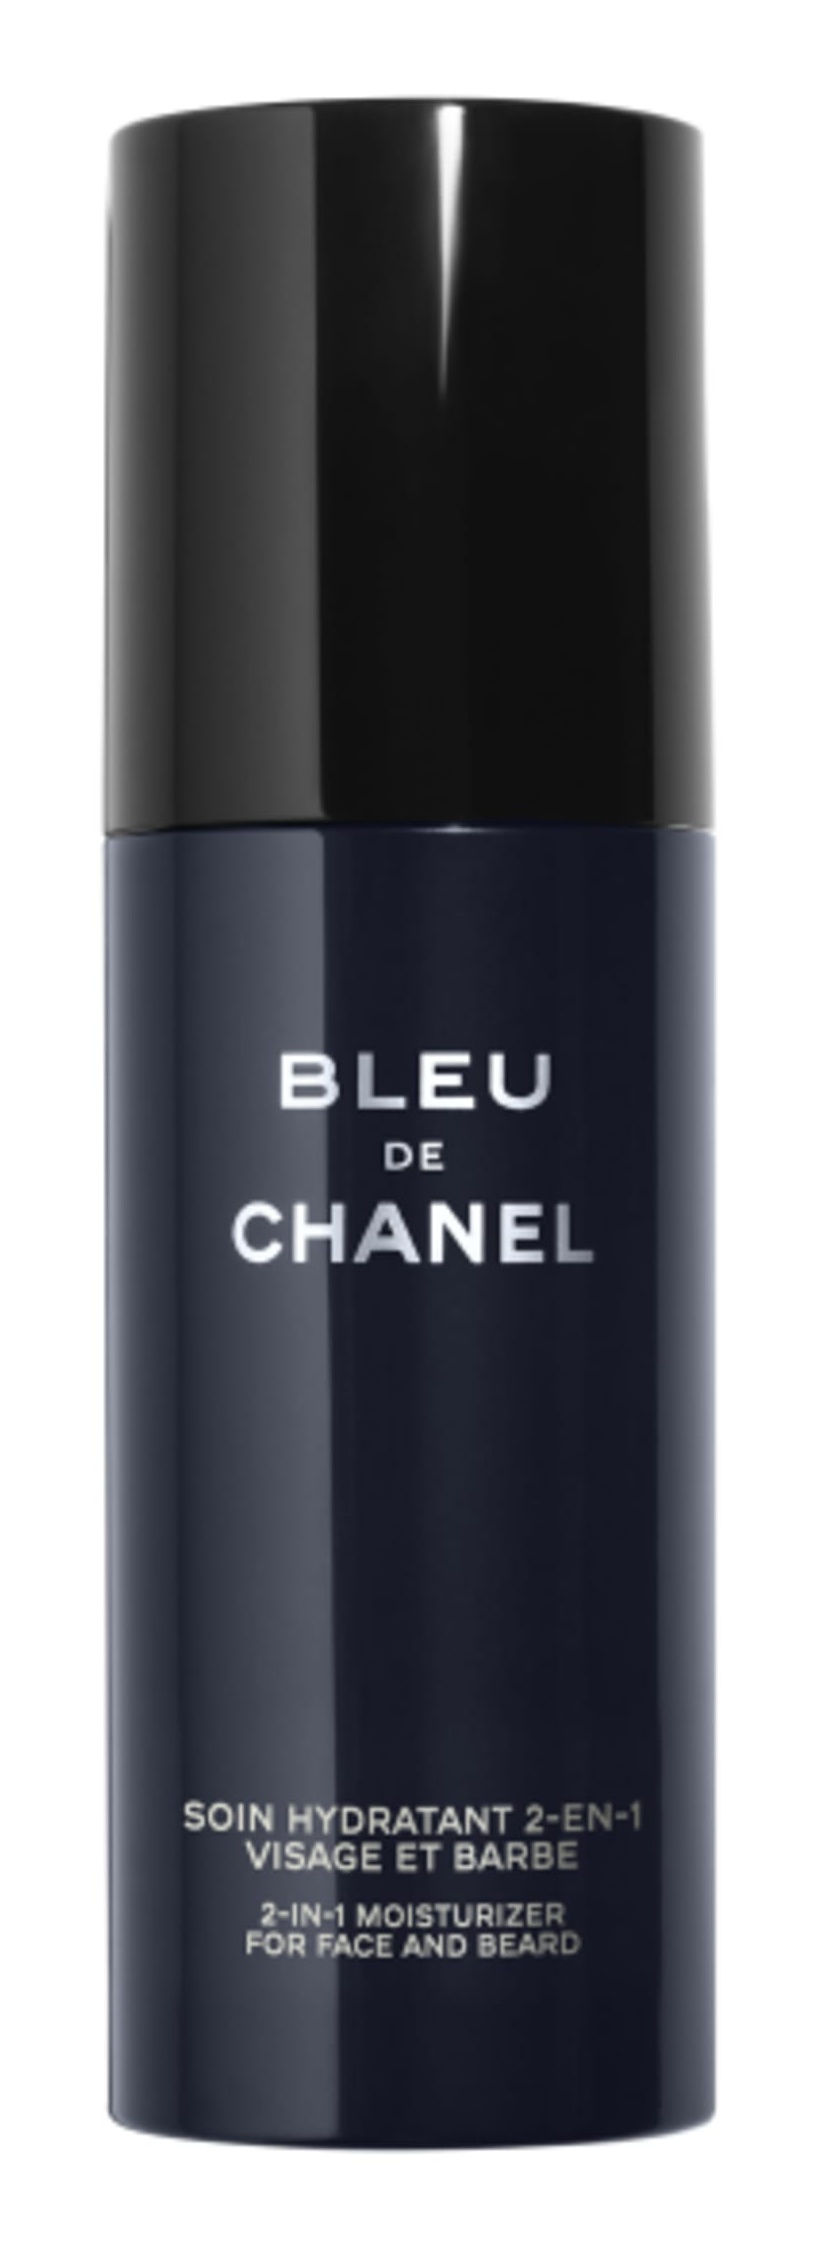 Chanel Men Bleu De Chanel 2-In-1 Moisturizer For Face And Beard